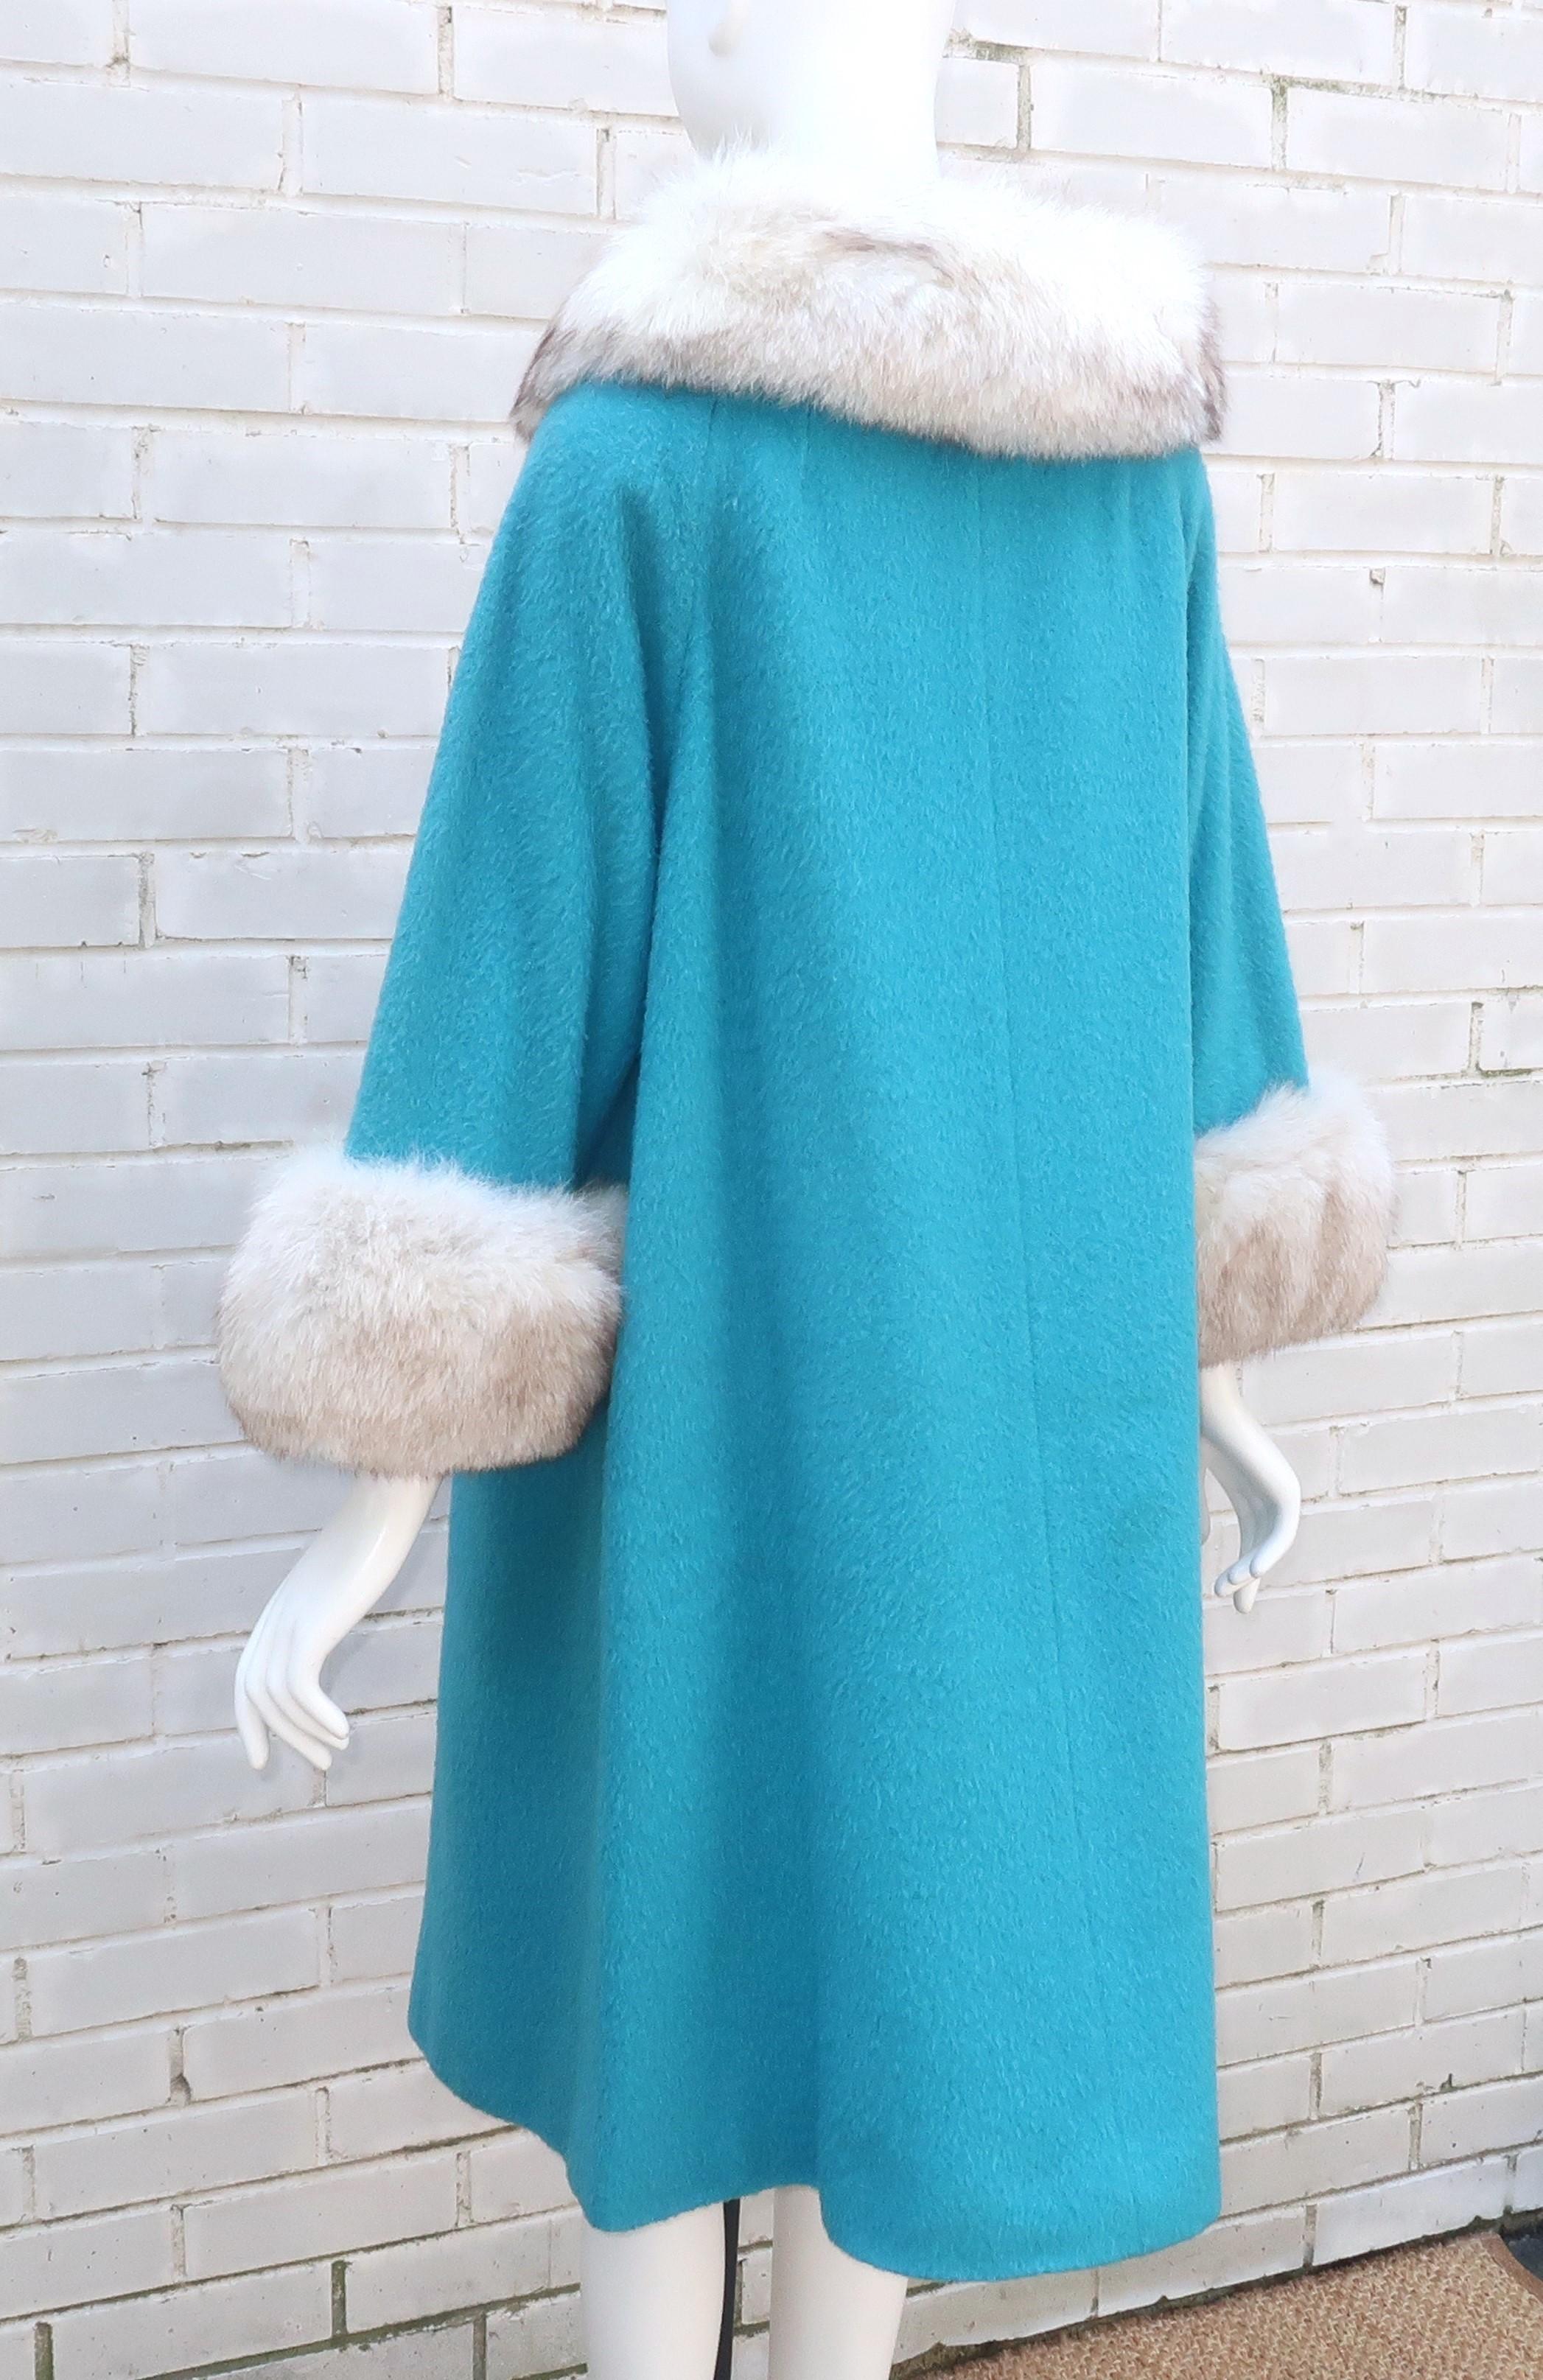 Lilli Ann Aqua Blue Coat With Fox Fur Trim, C.1960 6